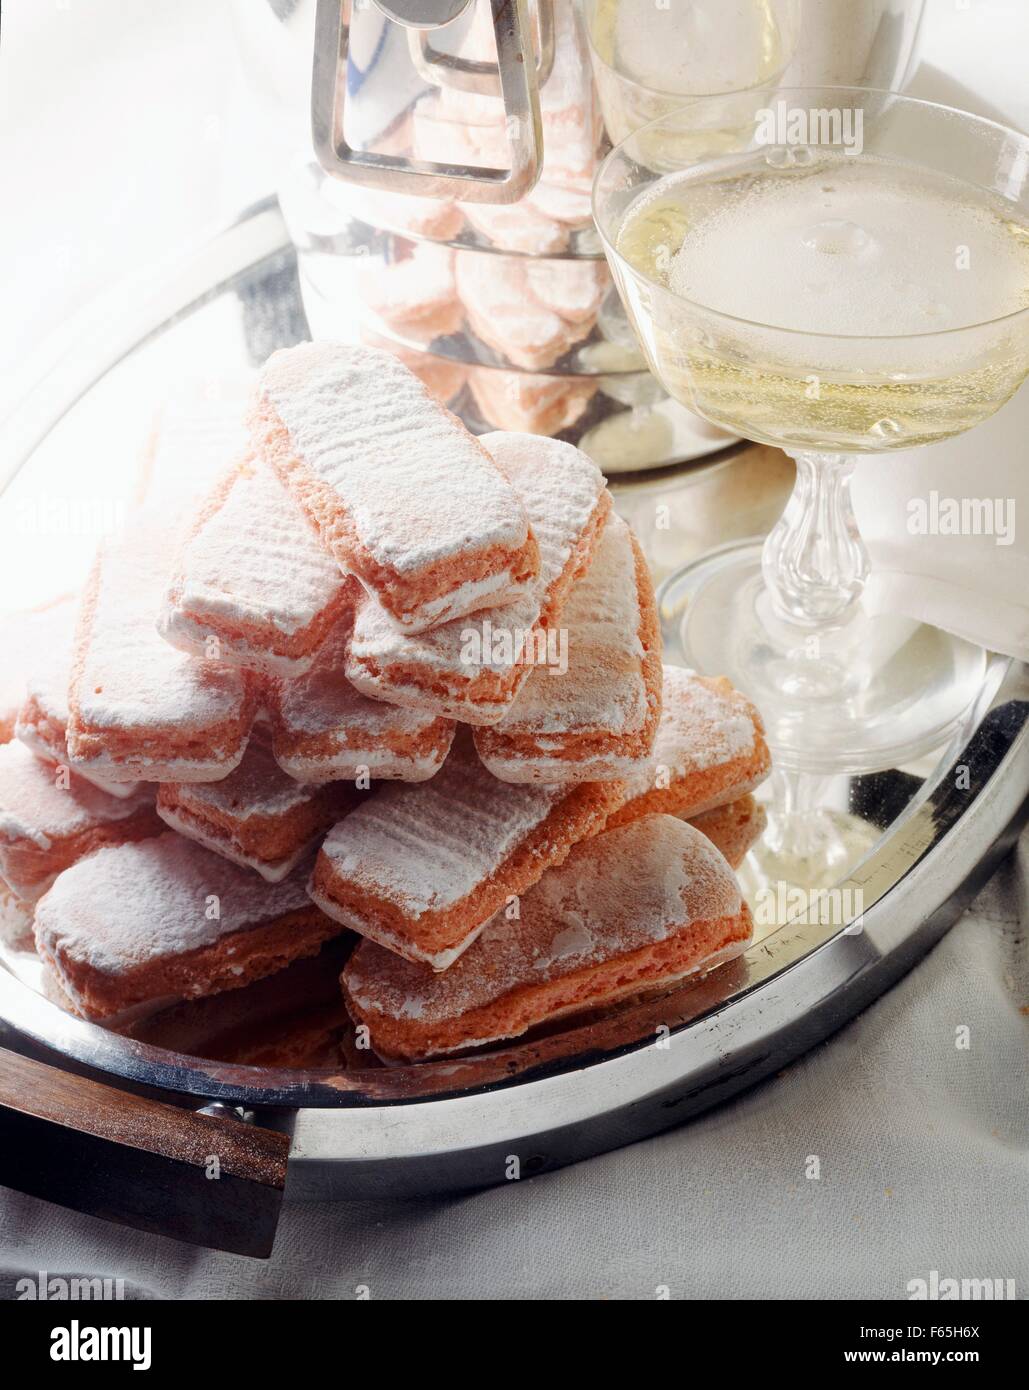 Biscuits roses et champagne Banque D'Images